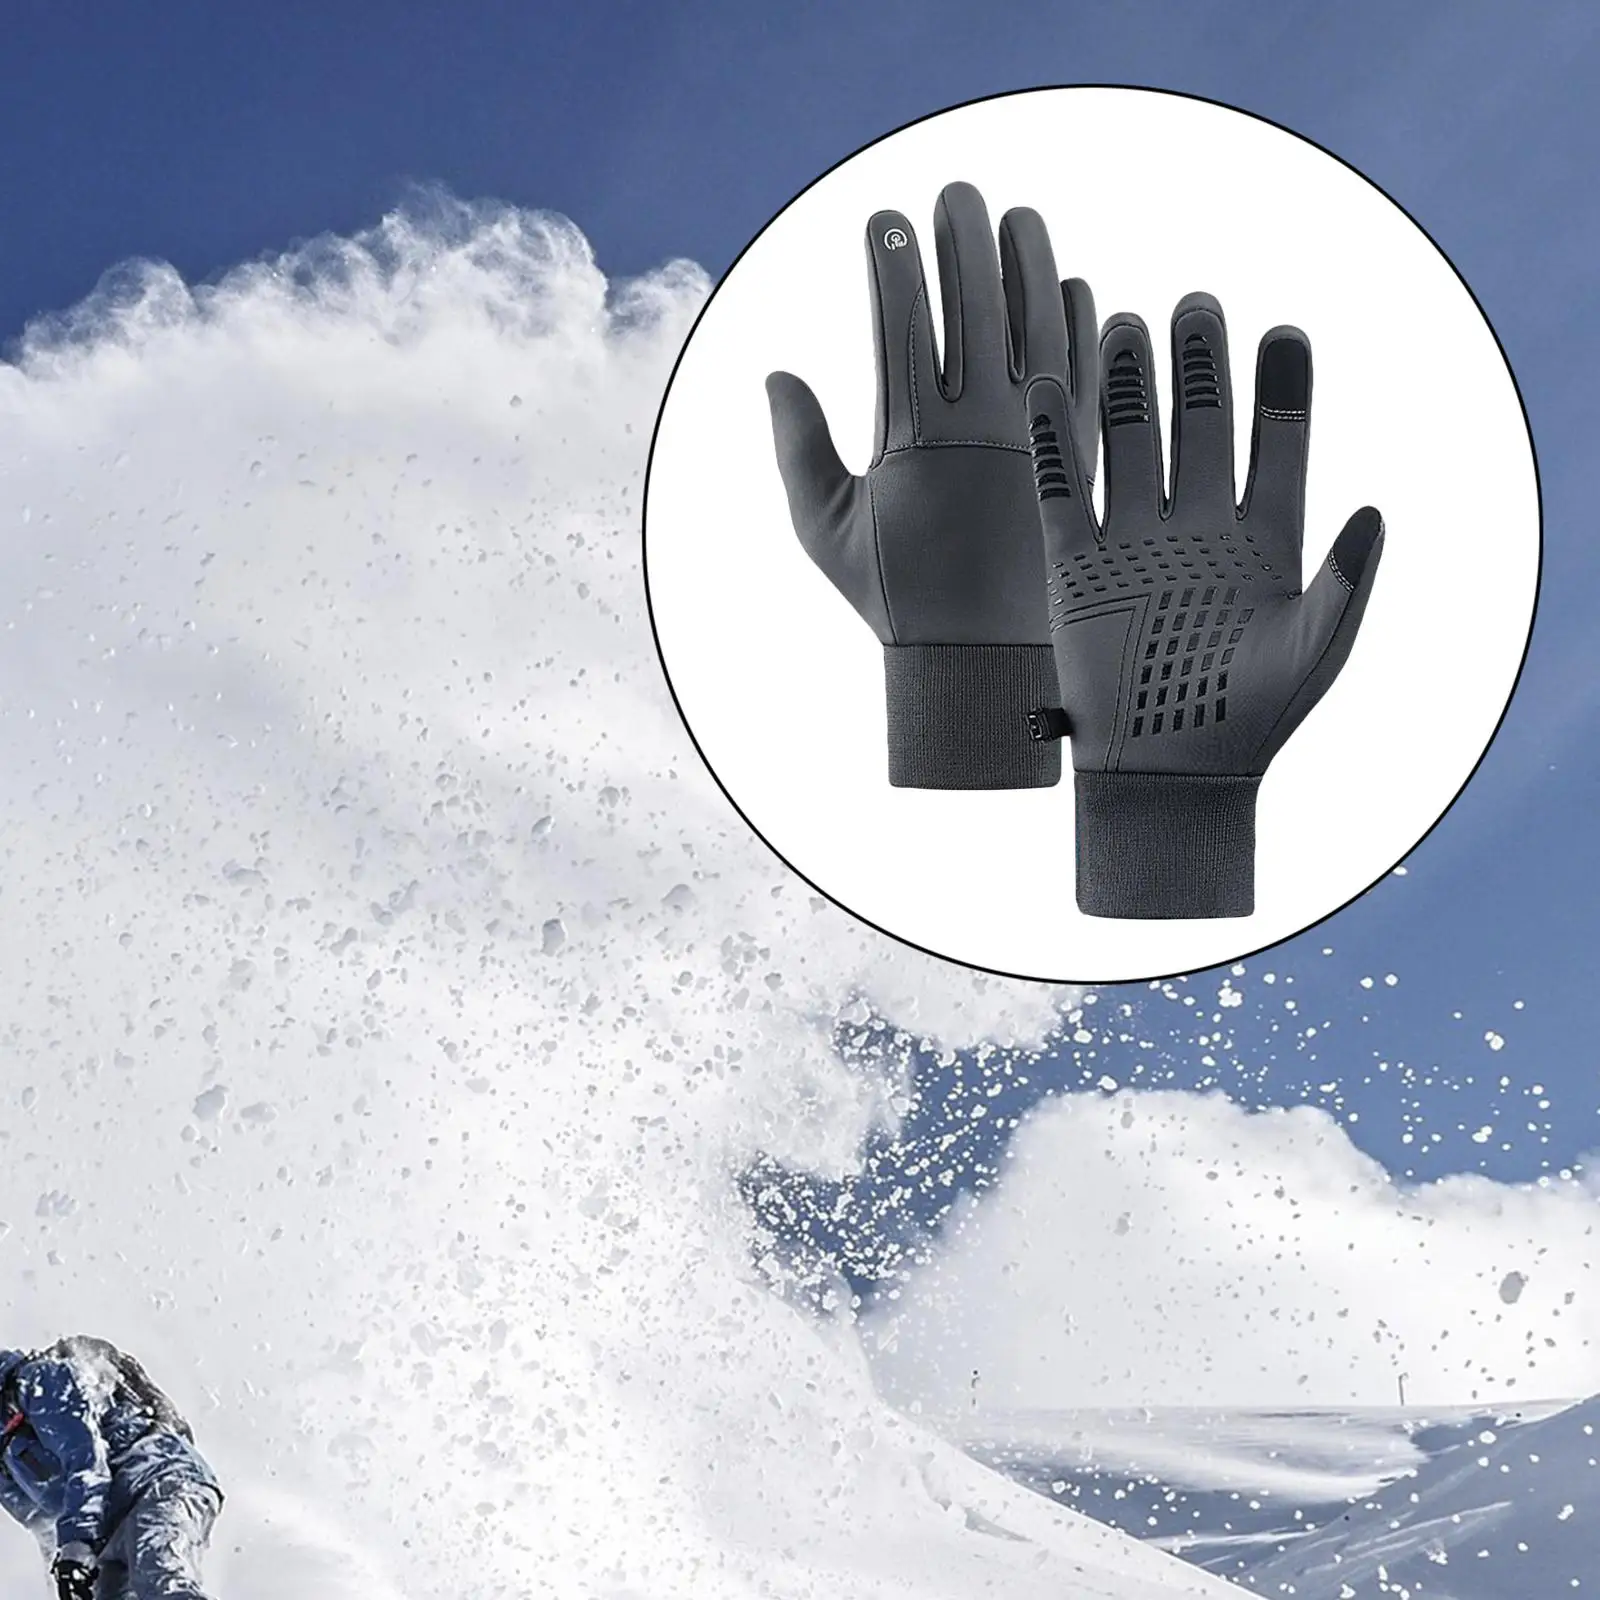 Women Winter Touch Screen Waterproof Black Non Slip Palm Comfortable Touchscreen Warm Mittens for Biking Climbing Outdoor